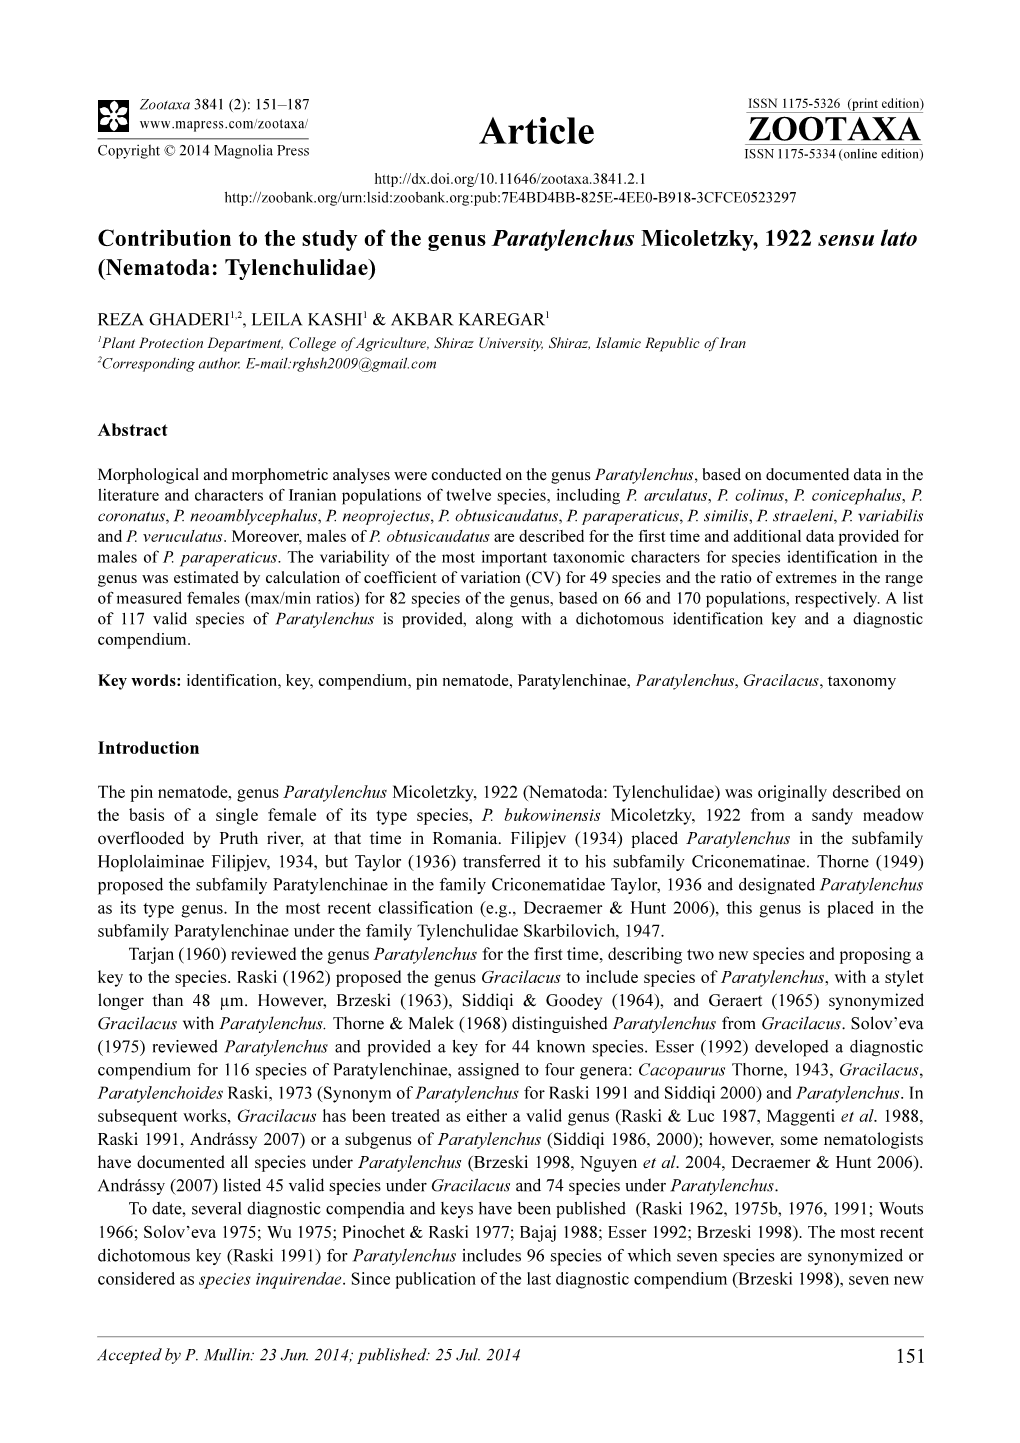 Contribution to the Study of the Genus Paratylenchus Micoletzky, 1922 Sensu Lato (Nematoda: Tylenchulidae)